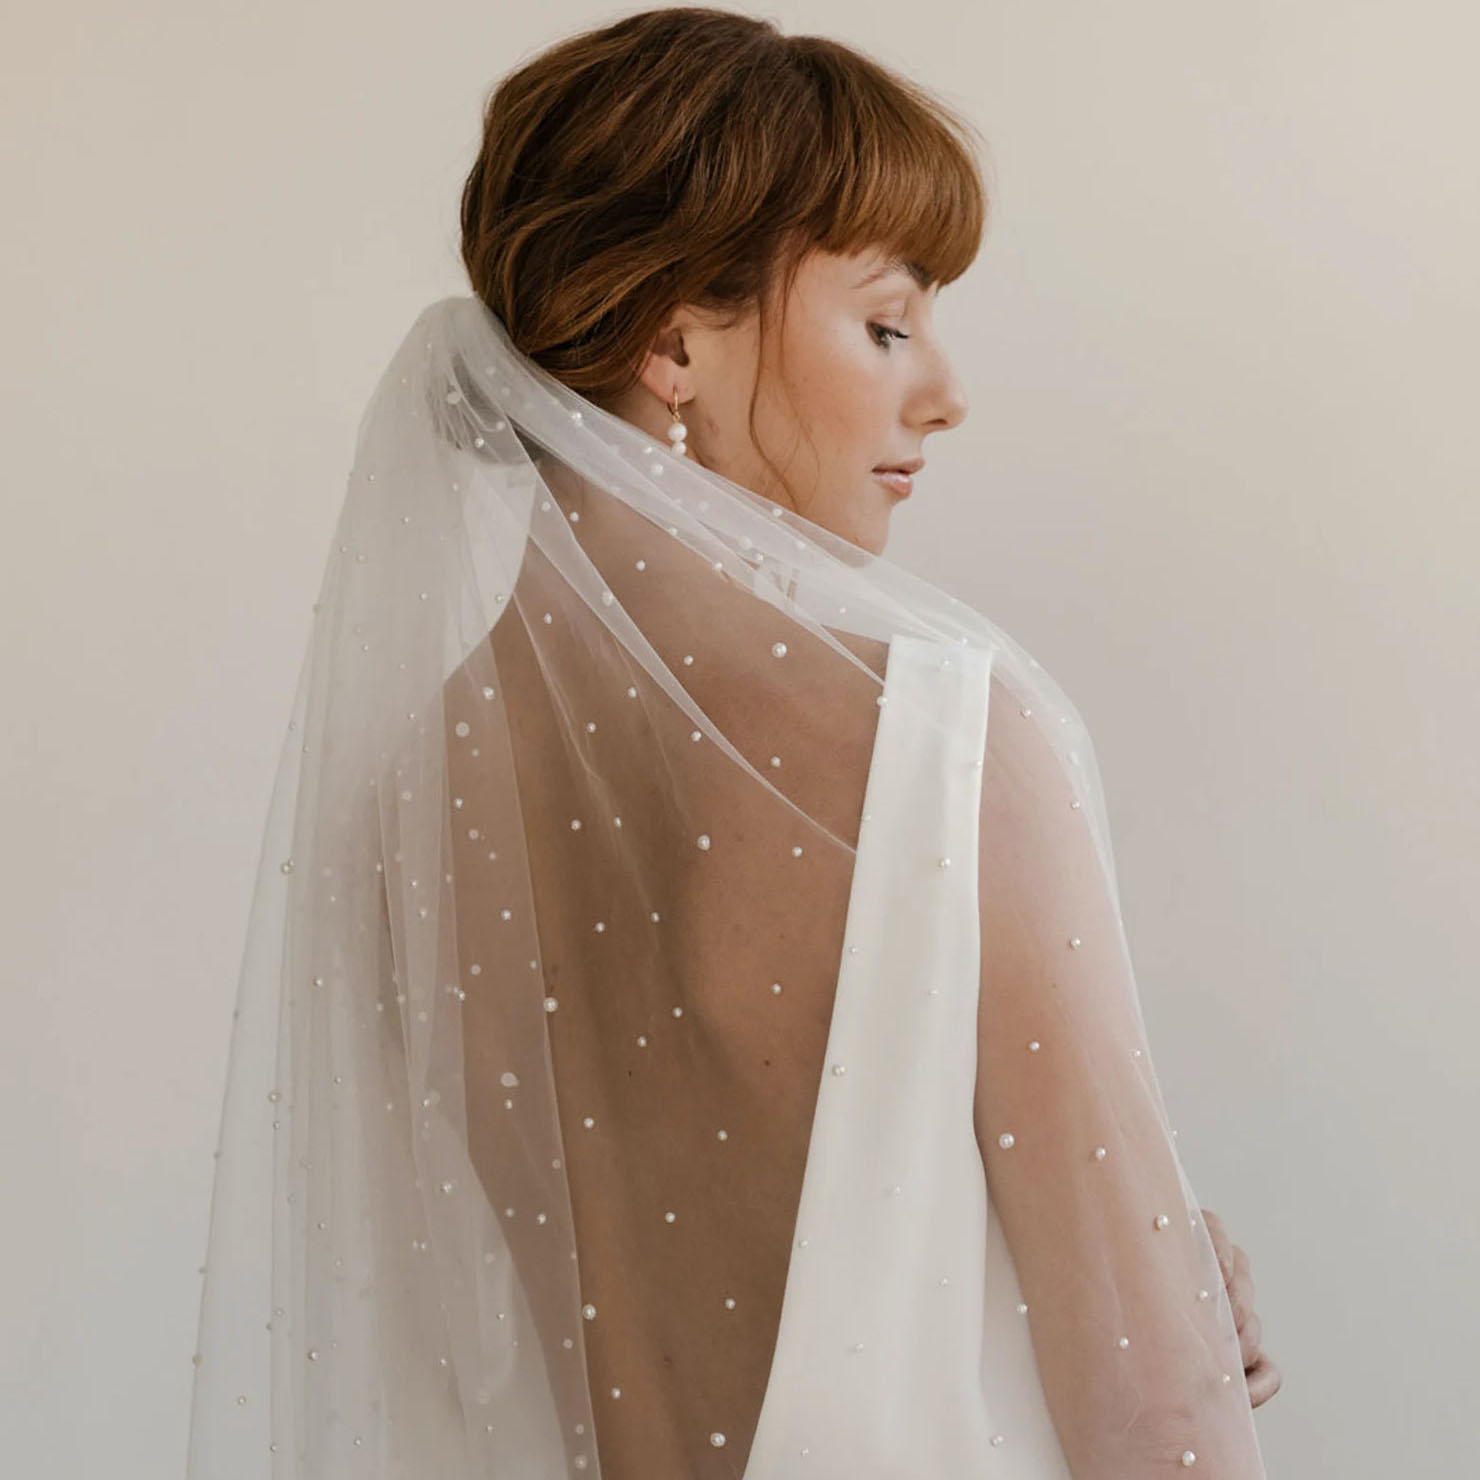 Wedding Dress Detailing With Pearls - 48 Studio